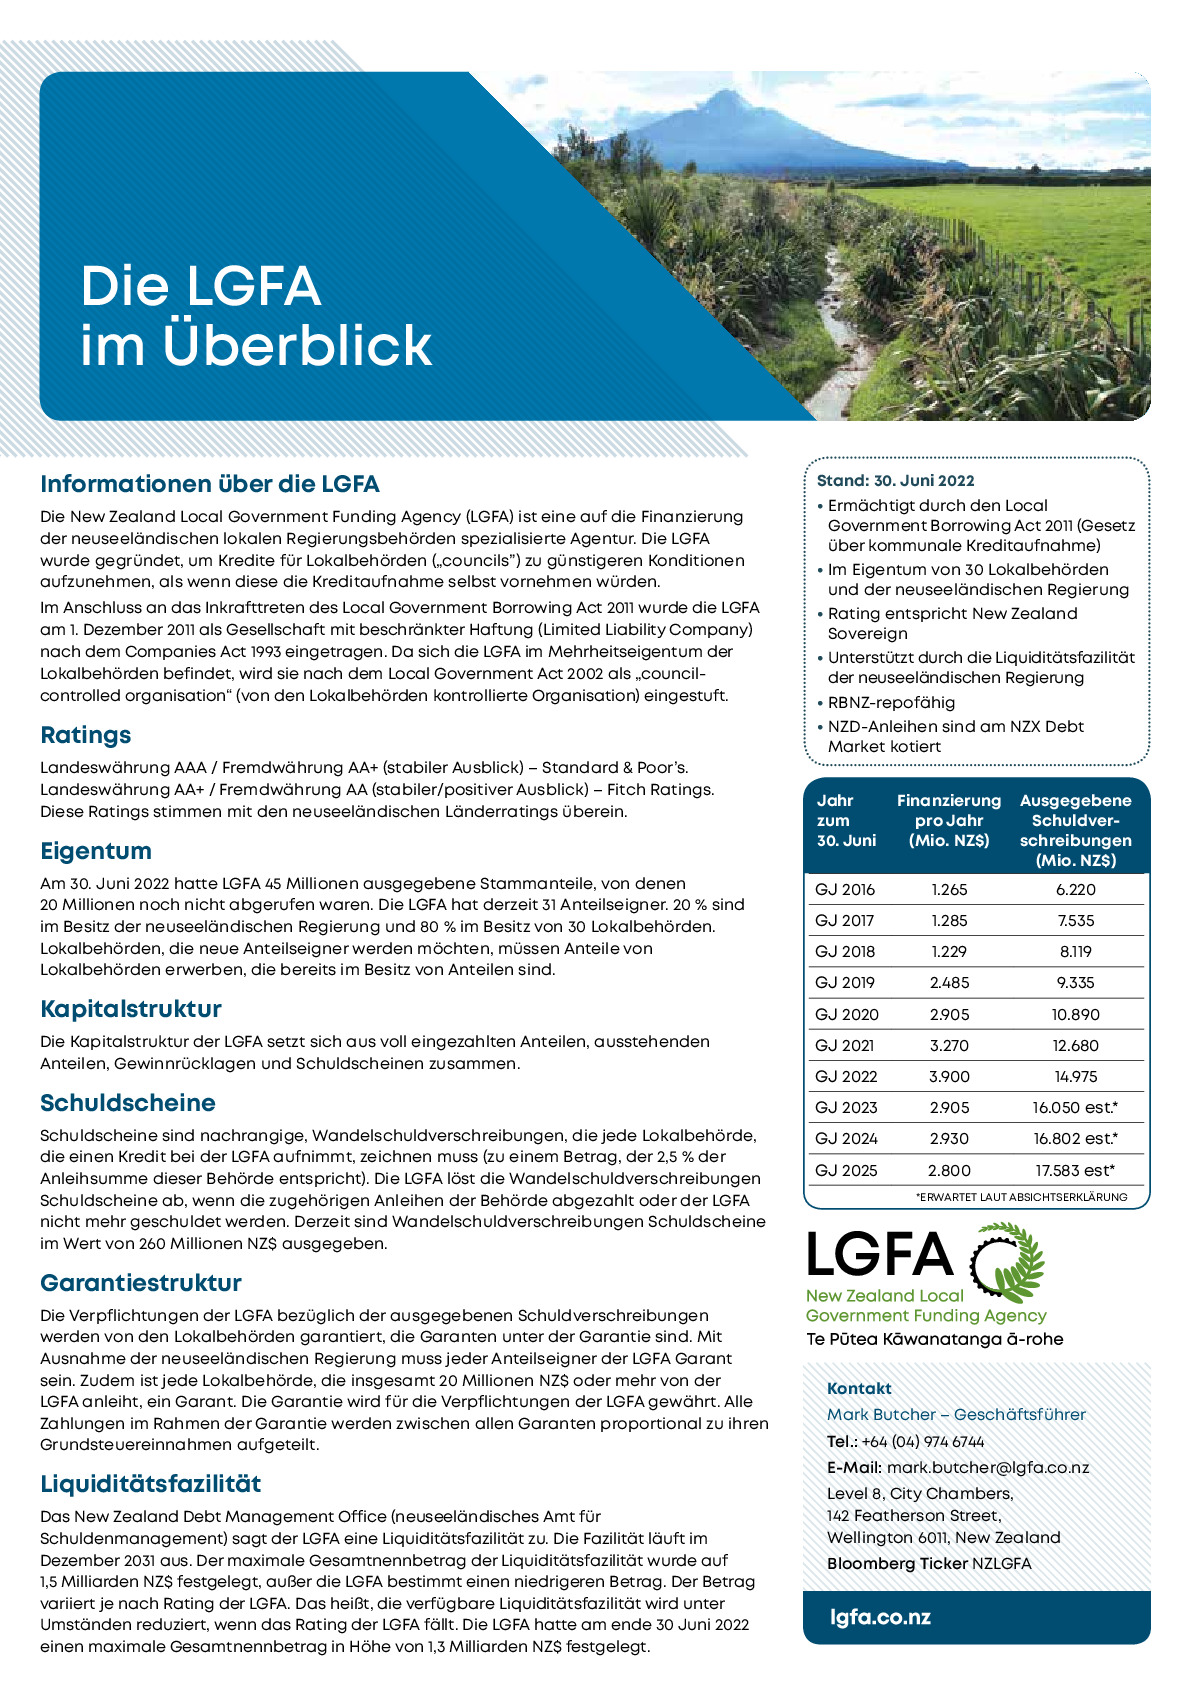 LGFA_Overview_Jun22 - German